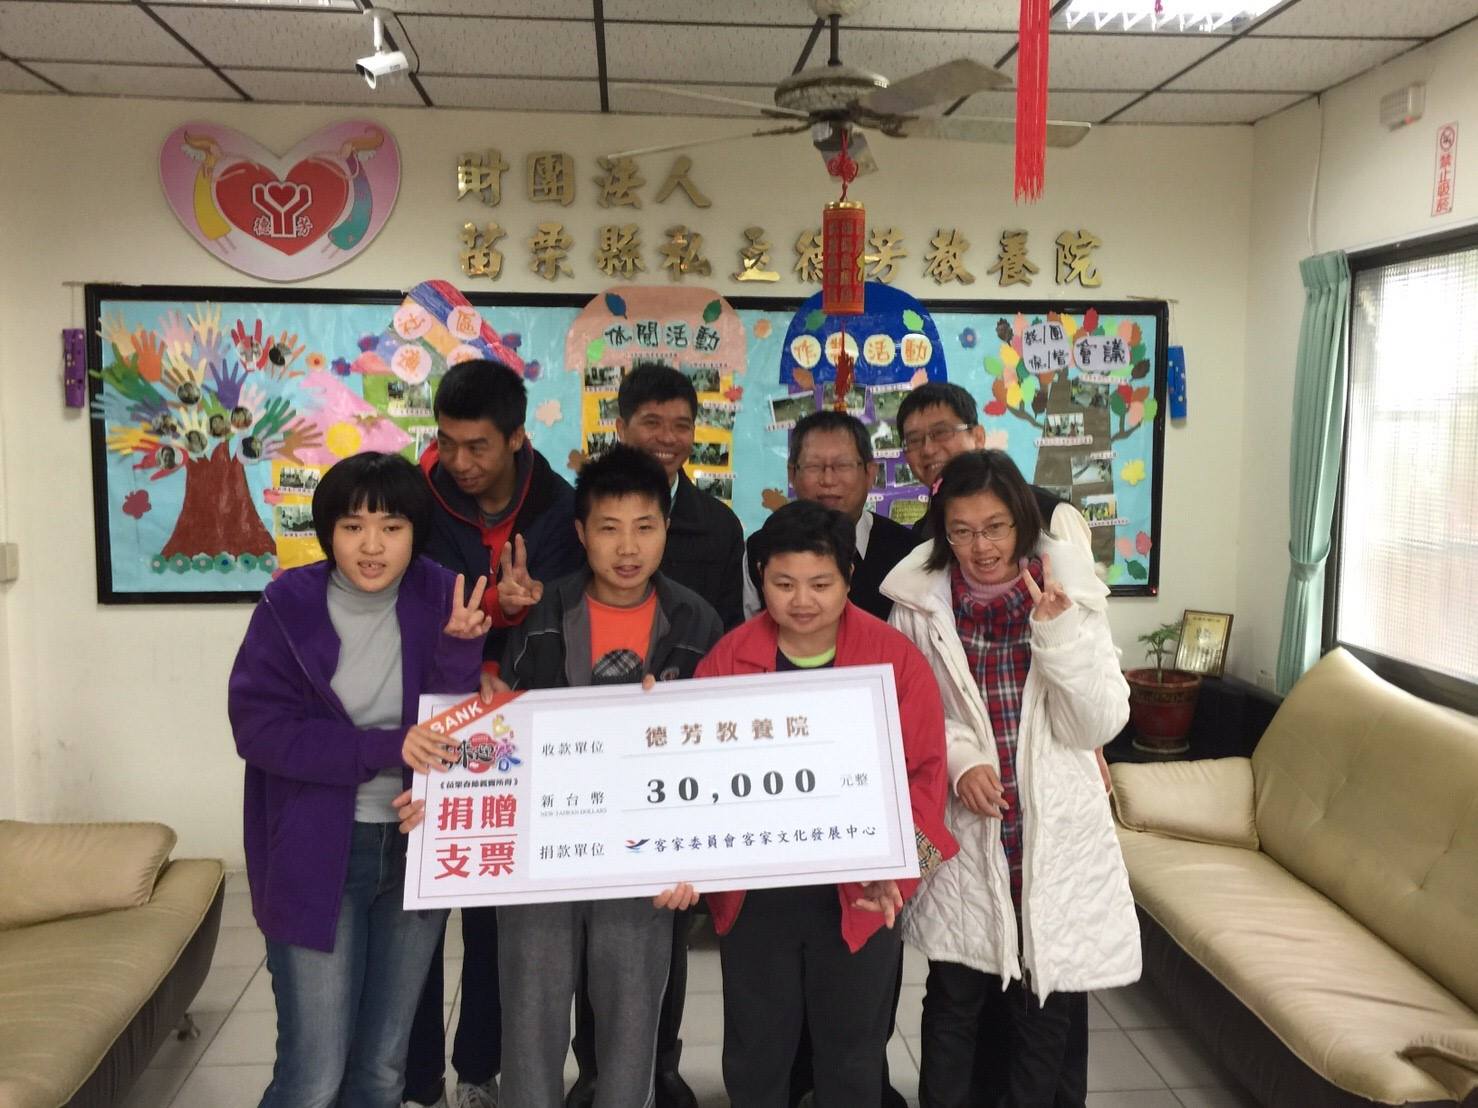 Sending a warn heart to De-fang in Miaoli during Chinese New Year 展示圖